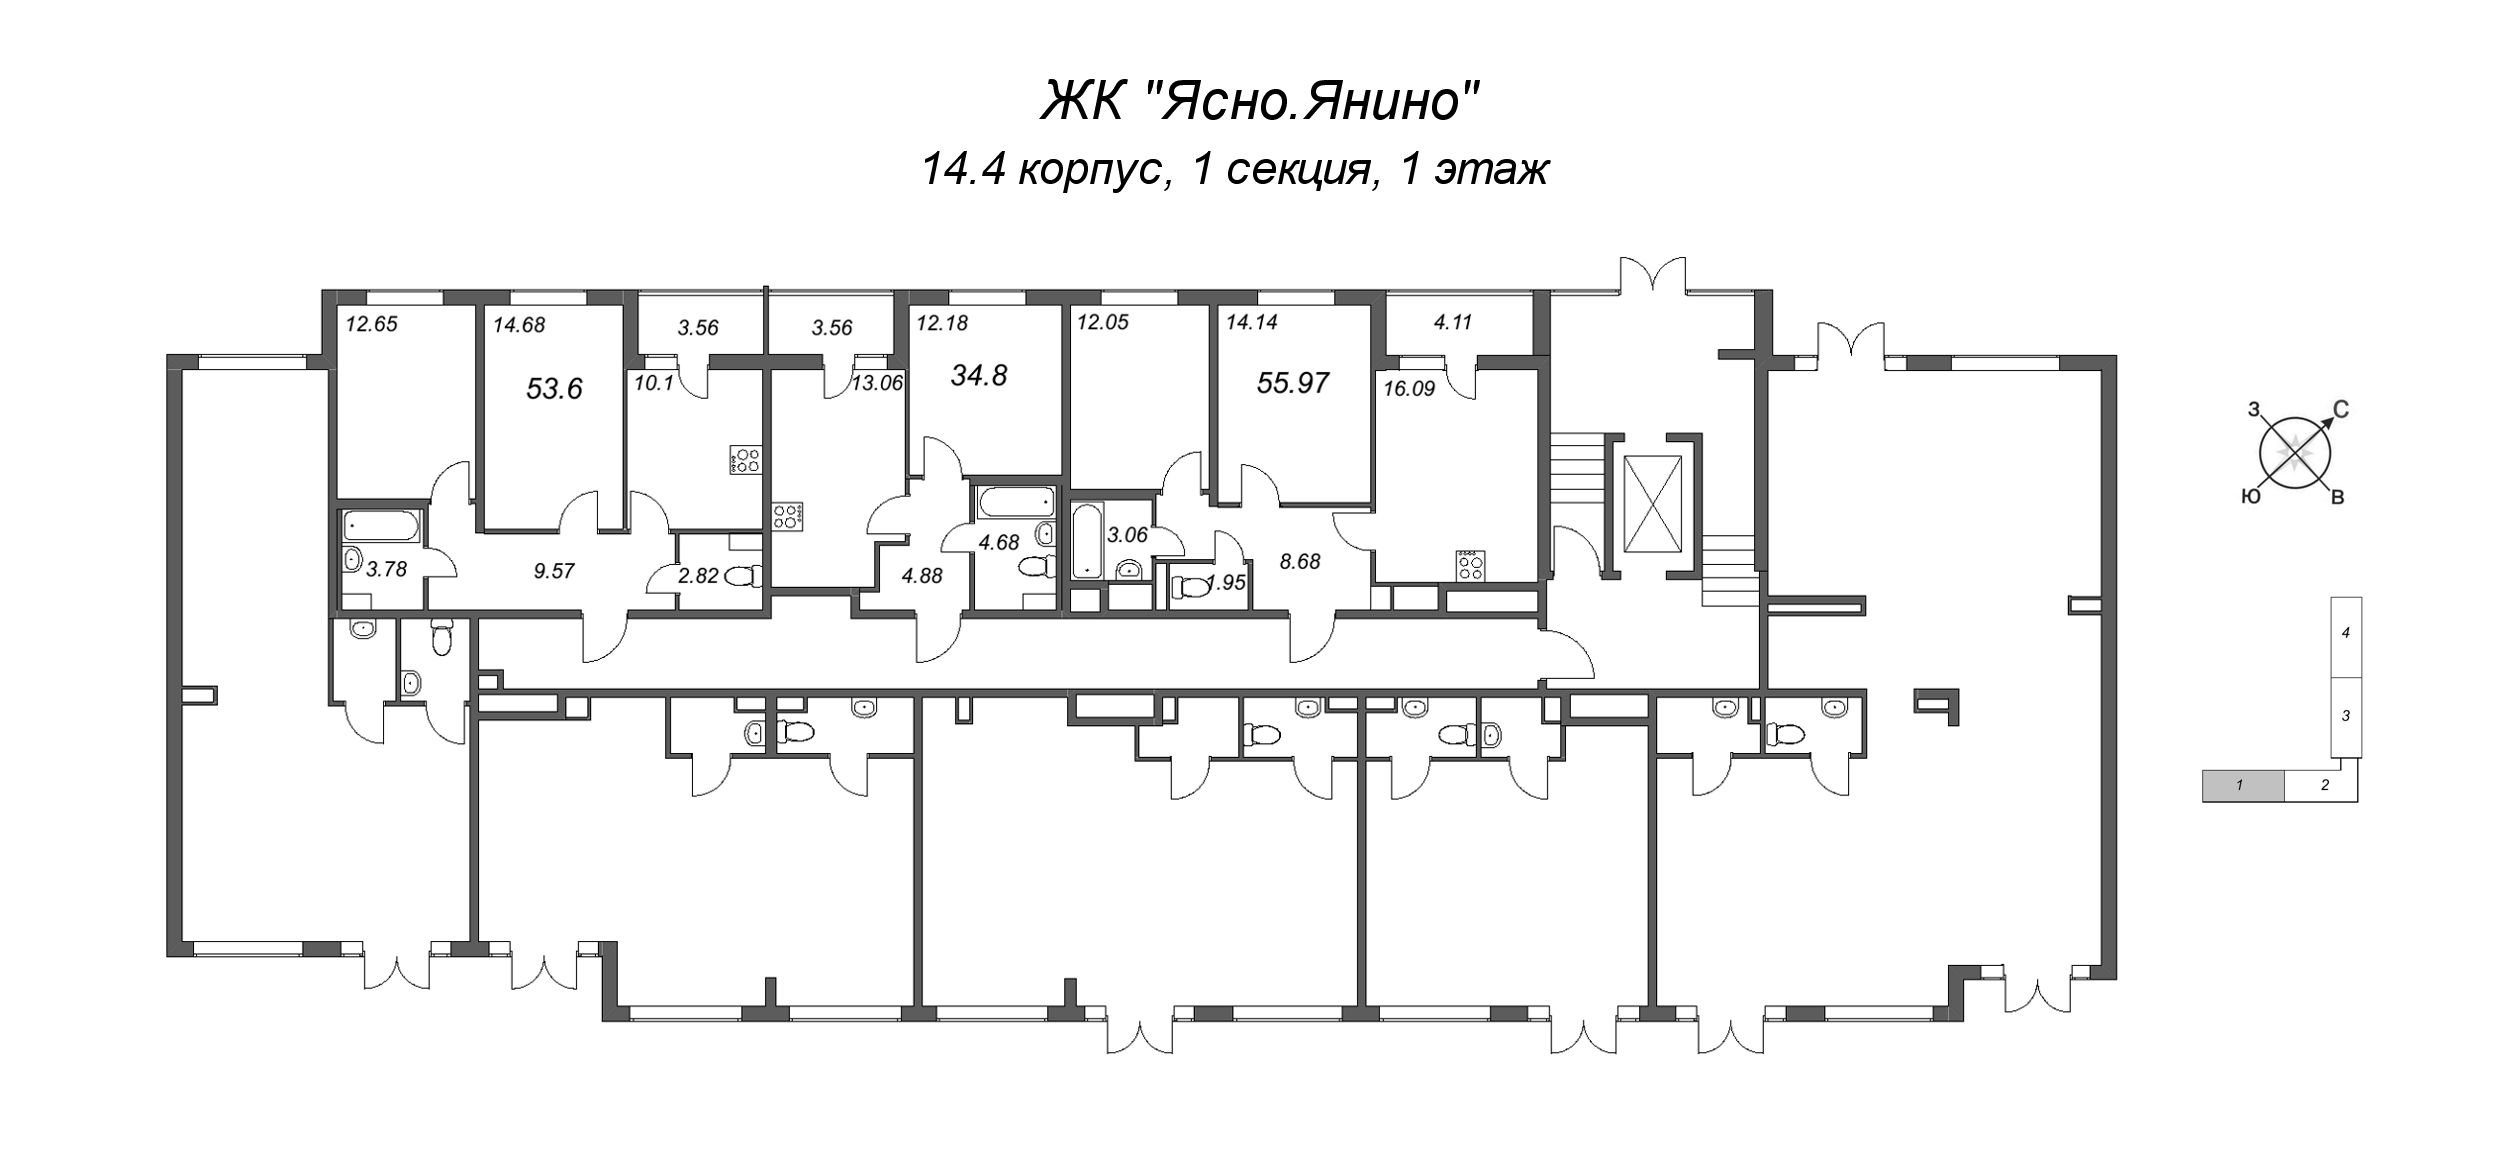 1-комнатная квартира, 34.8 м² в ЖК "Ясно.Янино" - планировка этажа